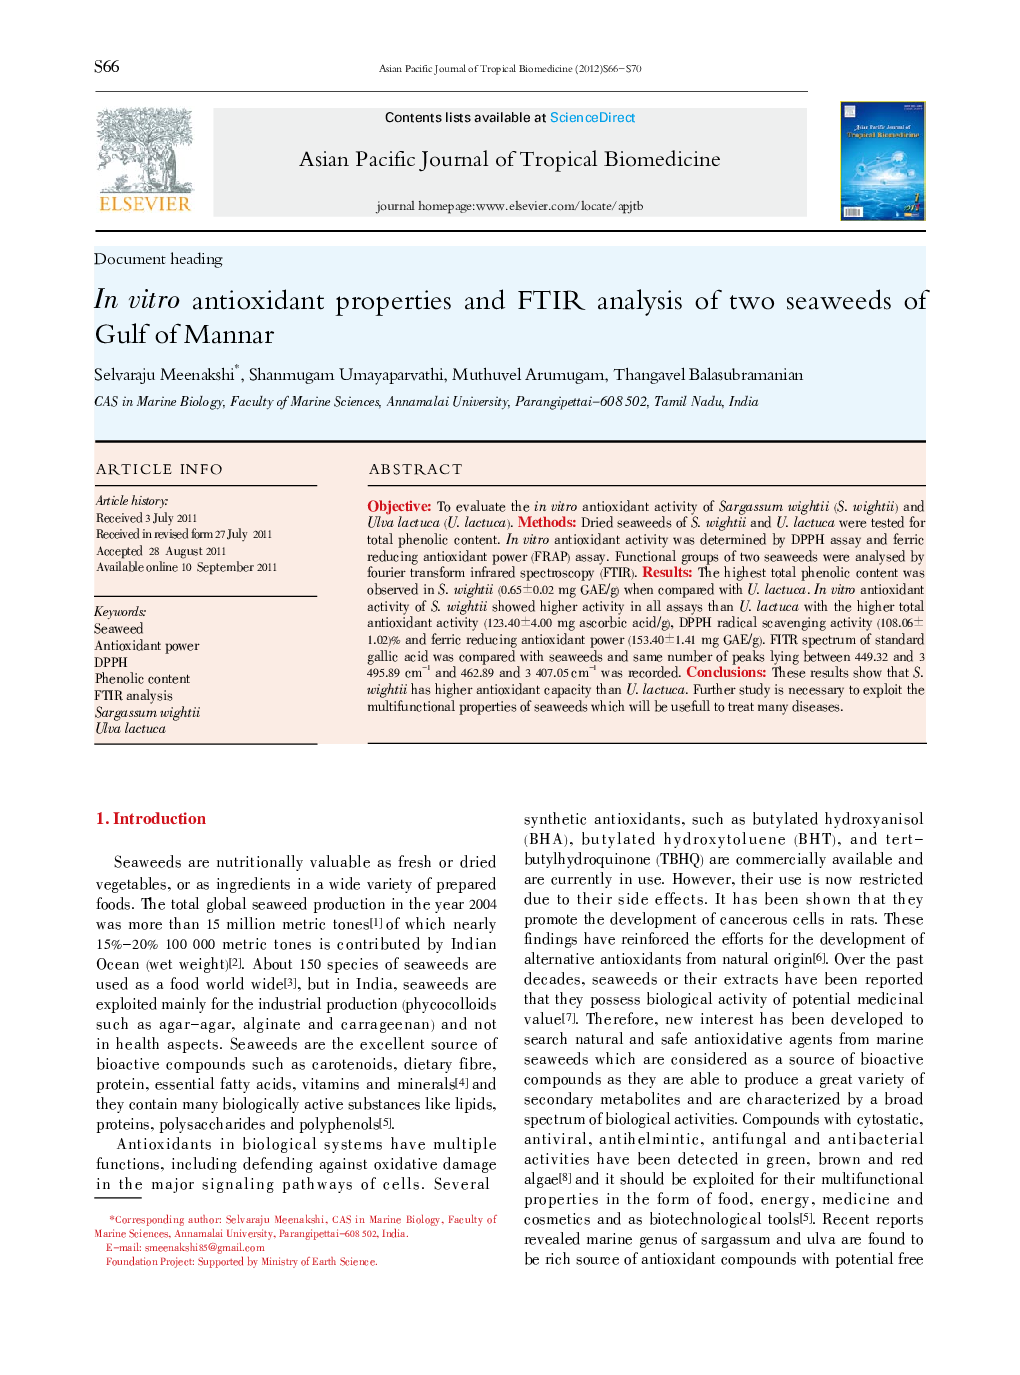 In vitro antioxidant properties and FTIR analysis of two seaweeds of Gulf of Mannar